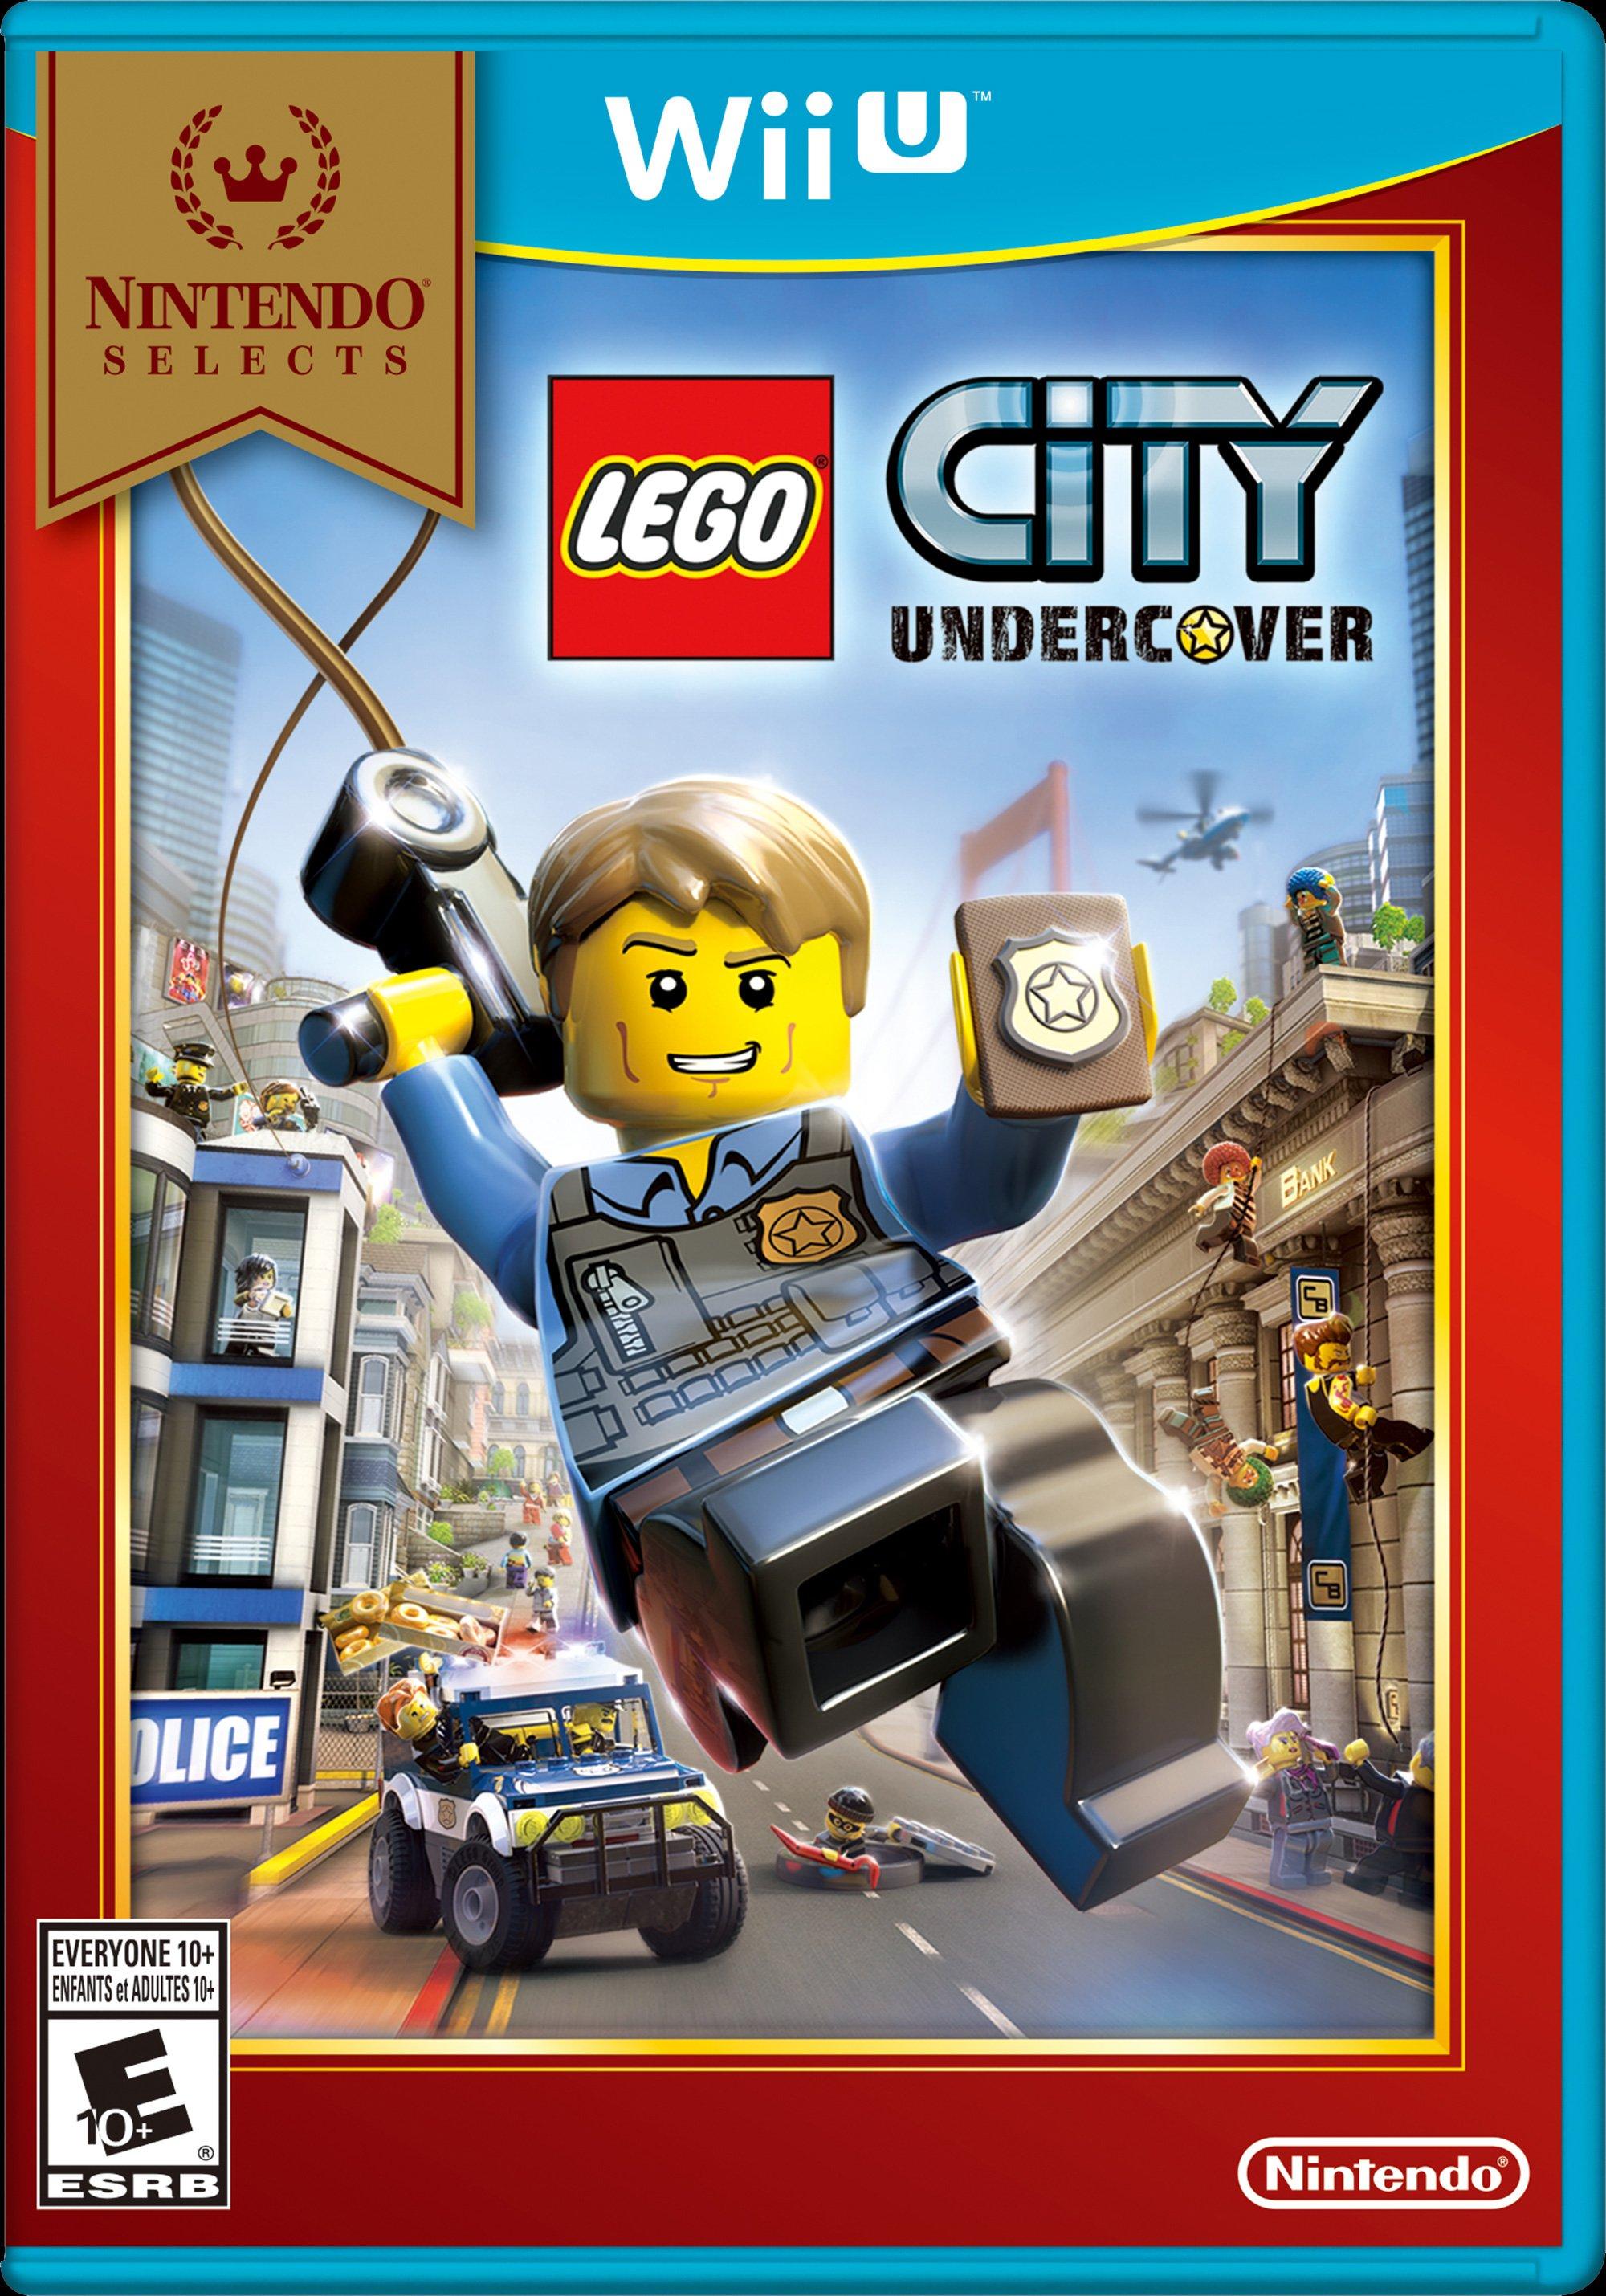 Nintendo Selects LEGO City: Undercover - Nintendo Wii U